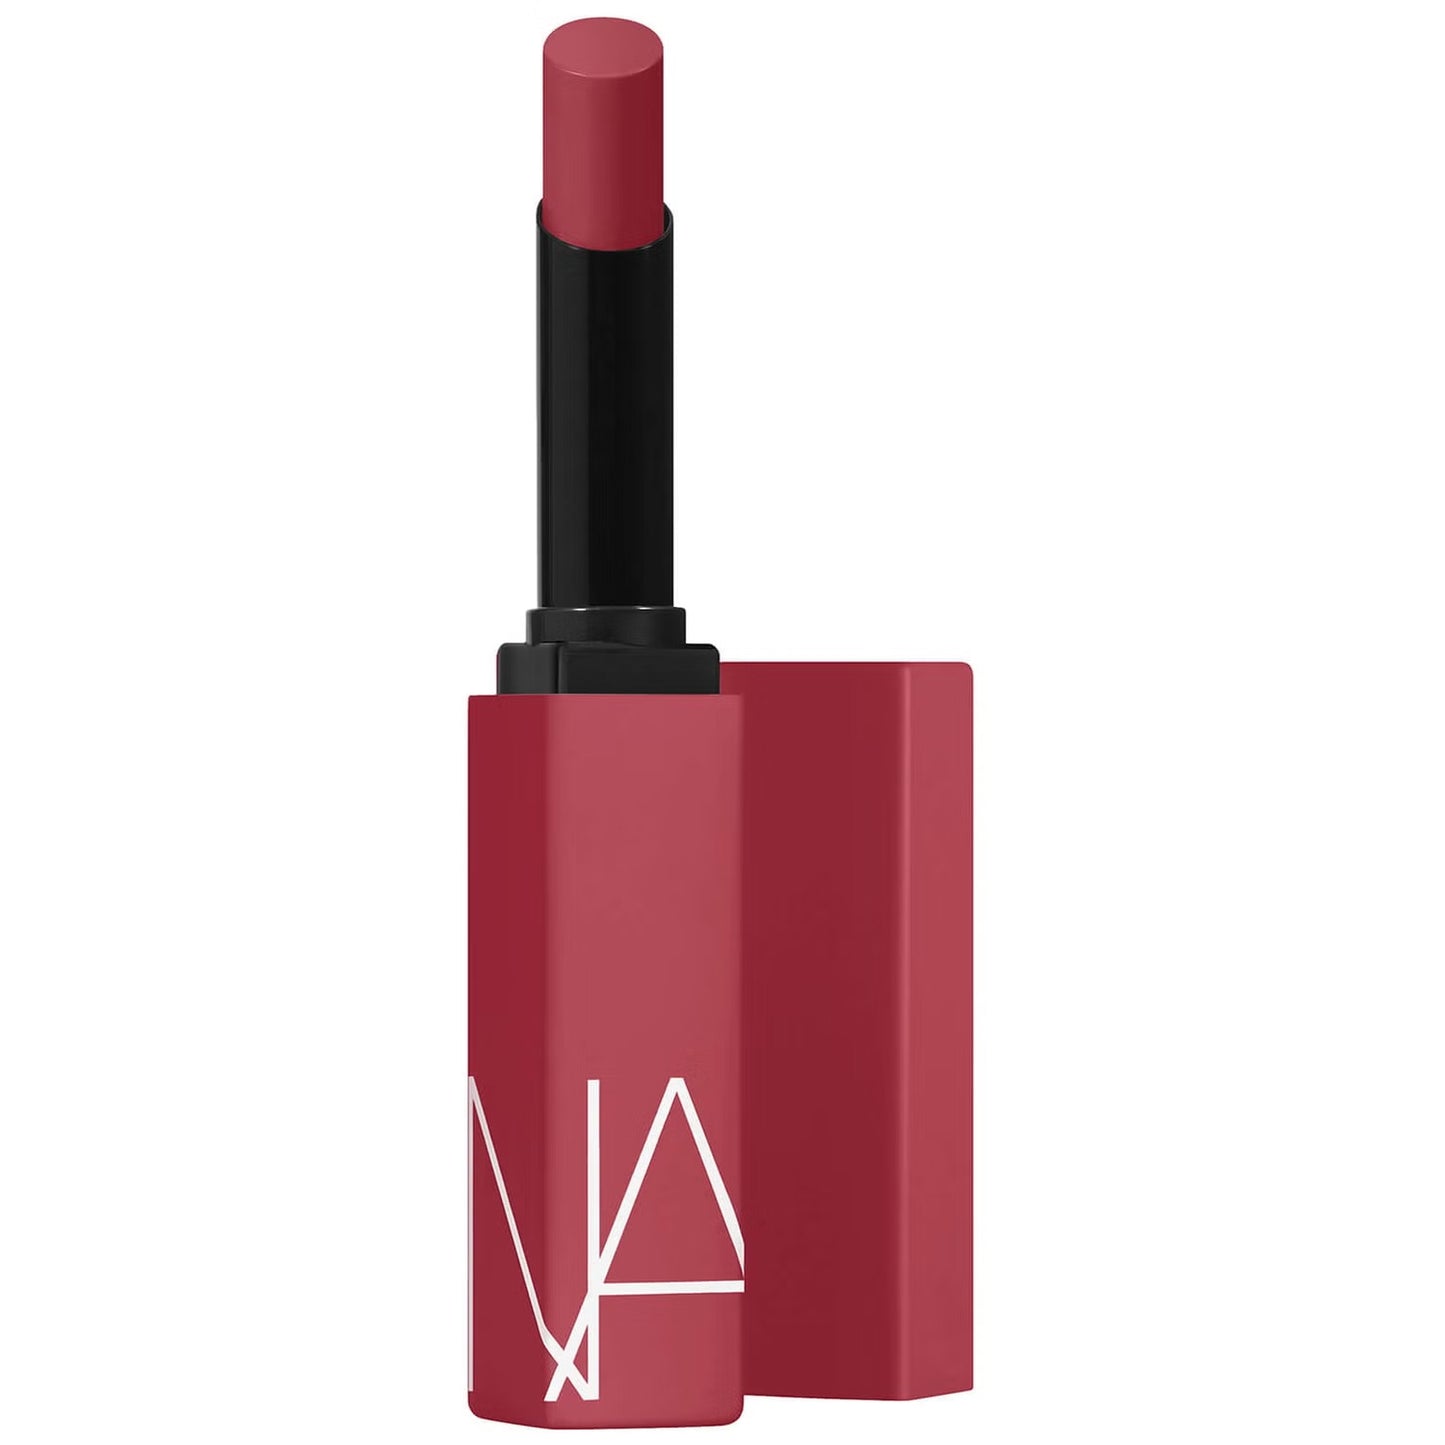 NARS - Powermatte Lipstick 1.5g - Get Lucky